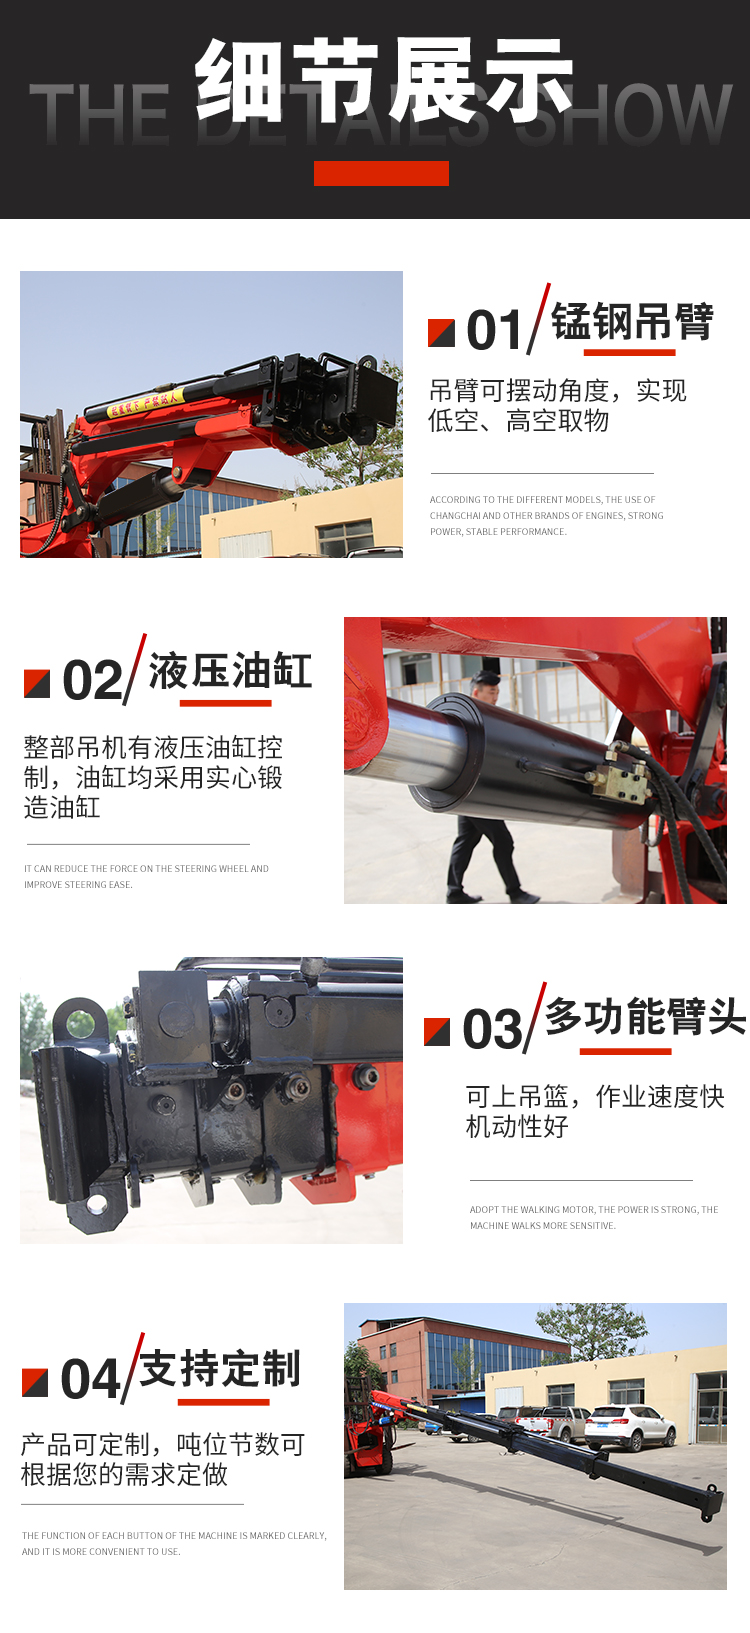 Hydraulic telescopic boom crane, forklift, fly arm crane, factory warehouse, roadway handling crane, Zhongrui Heavy Industry